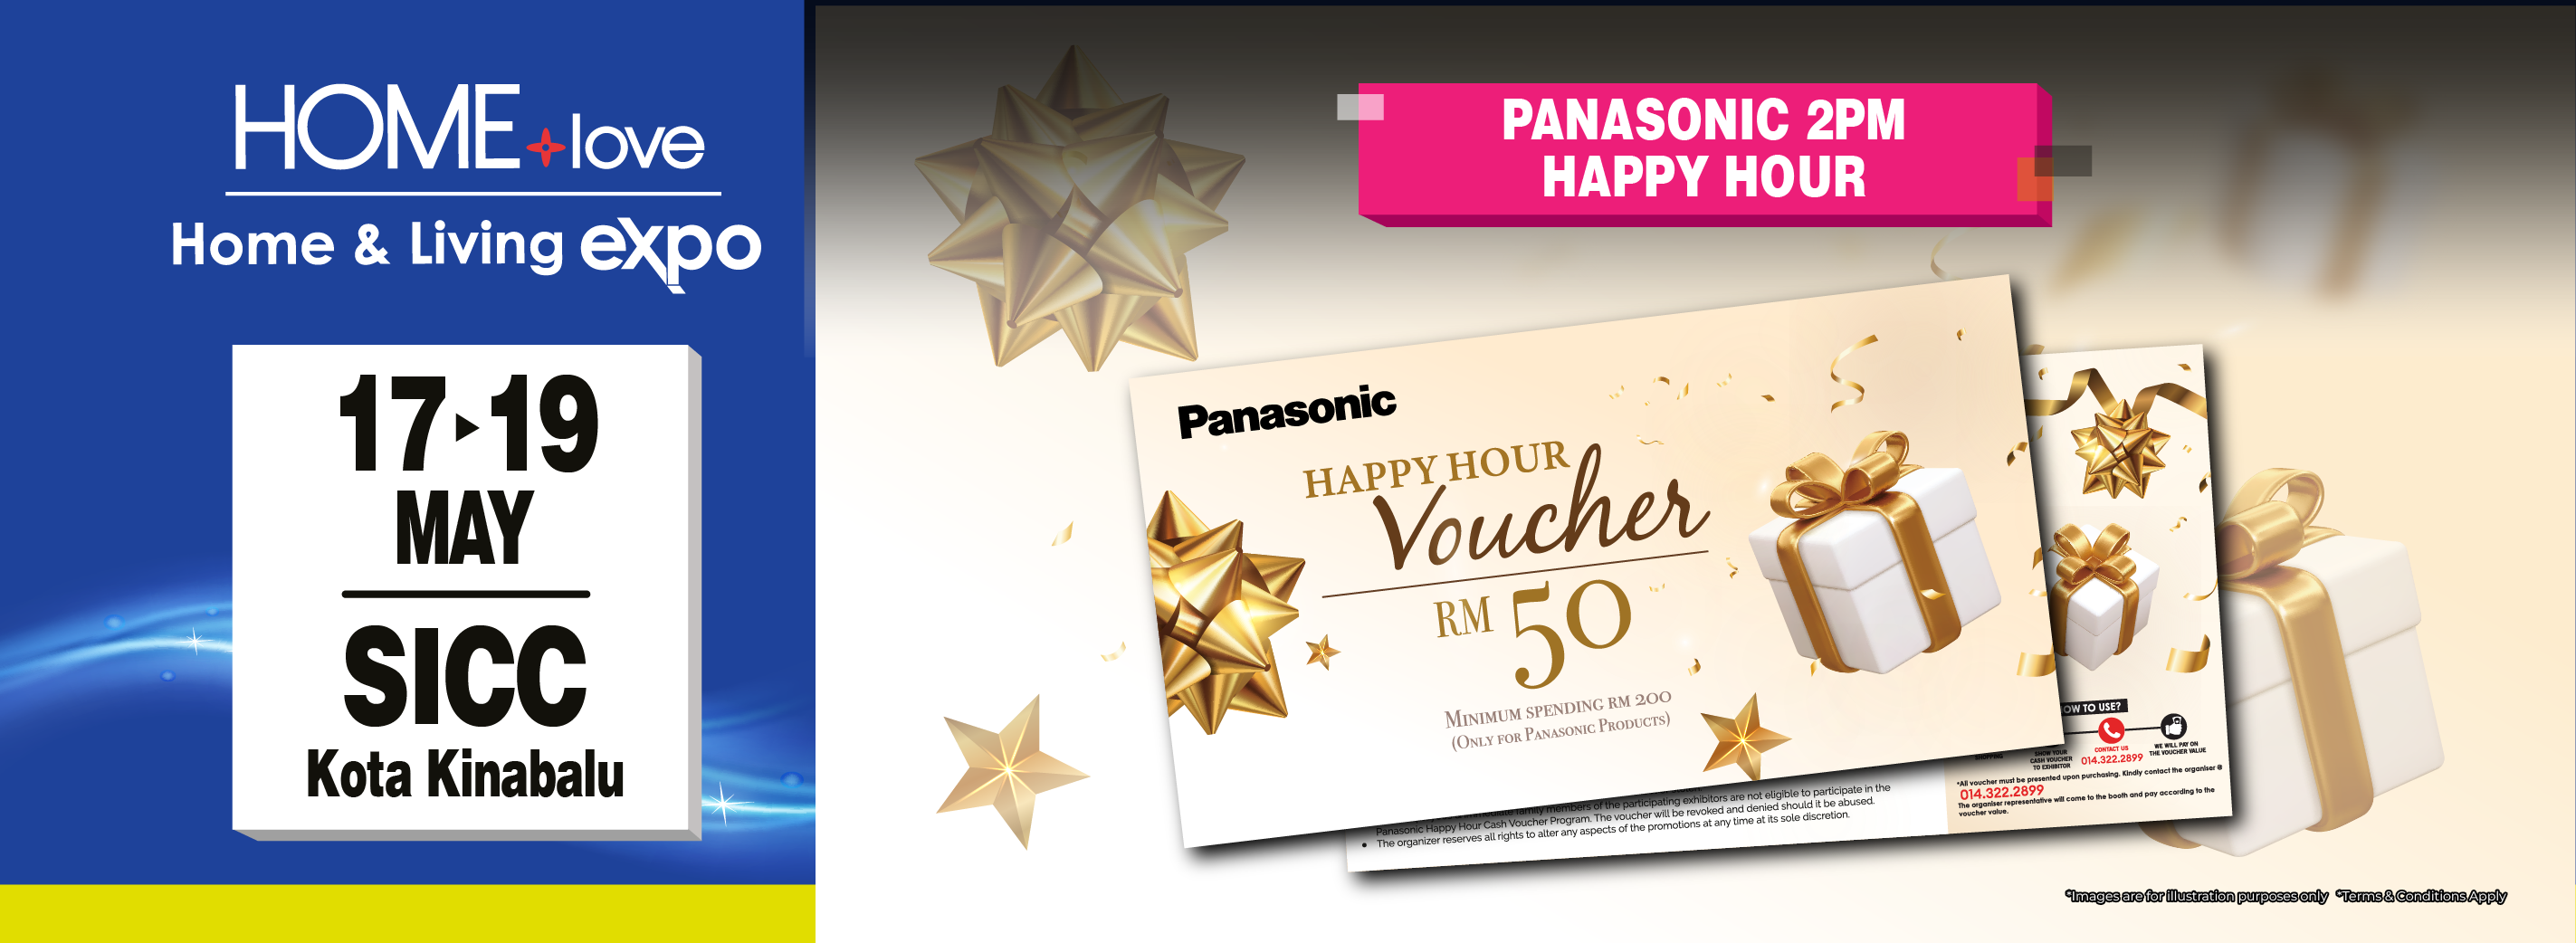 SICC Programme: Panasonic 2pm Happy Hour